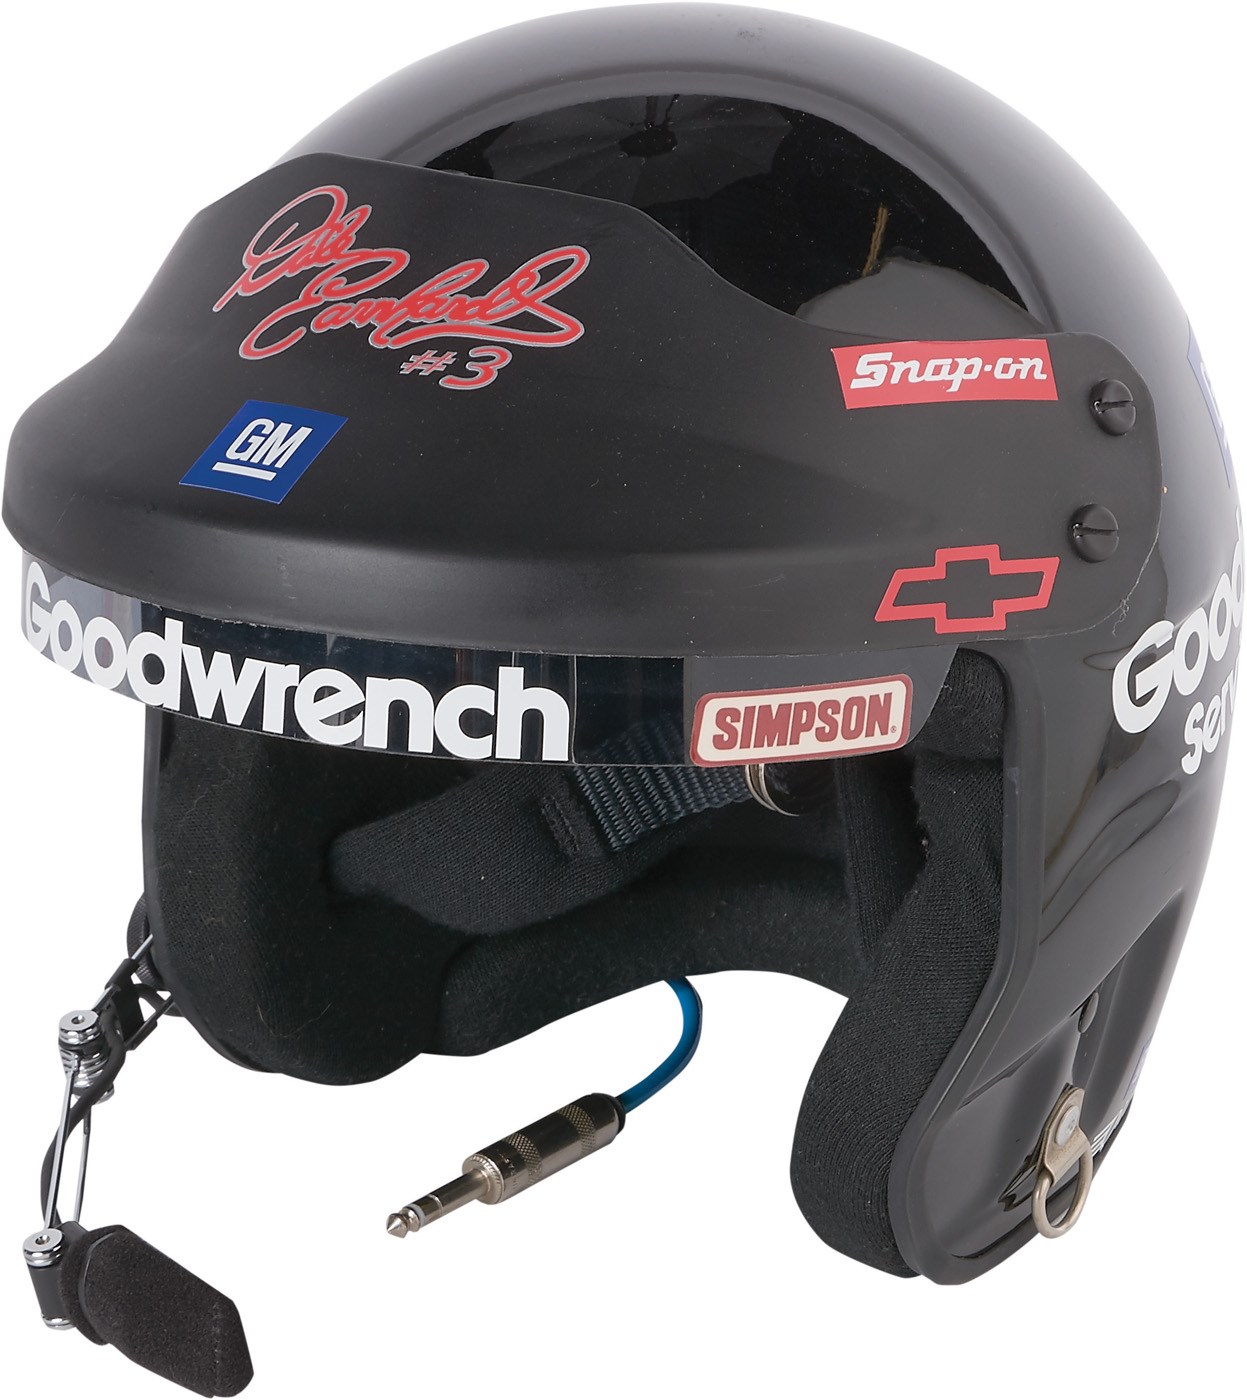 Olympics and All Sports - 1998 Dale Earnhardt Sr. Race Worn Helmet w/Signed Goggles (Earnhardt LOA)